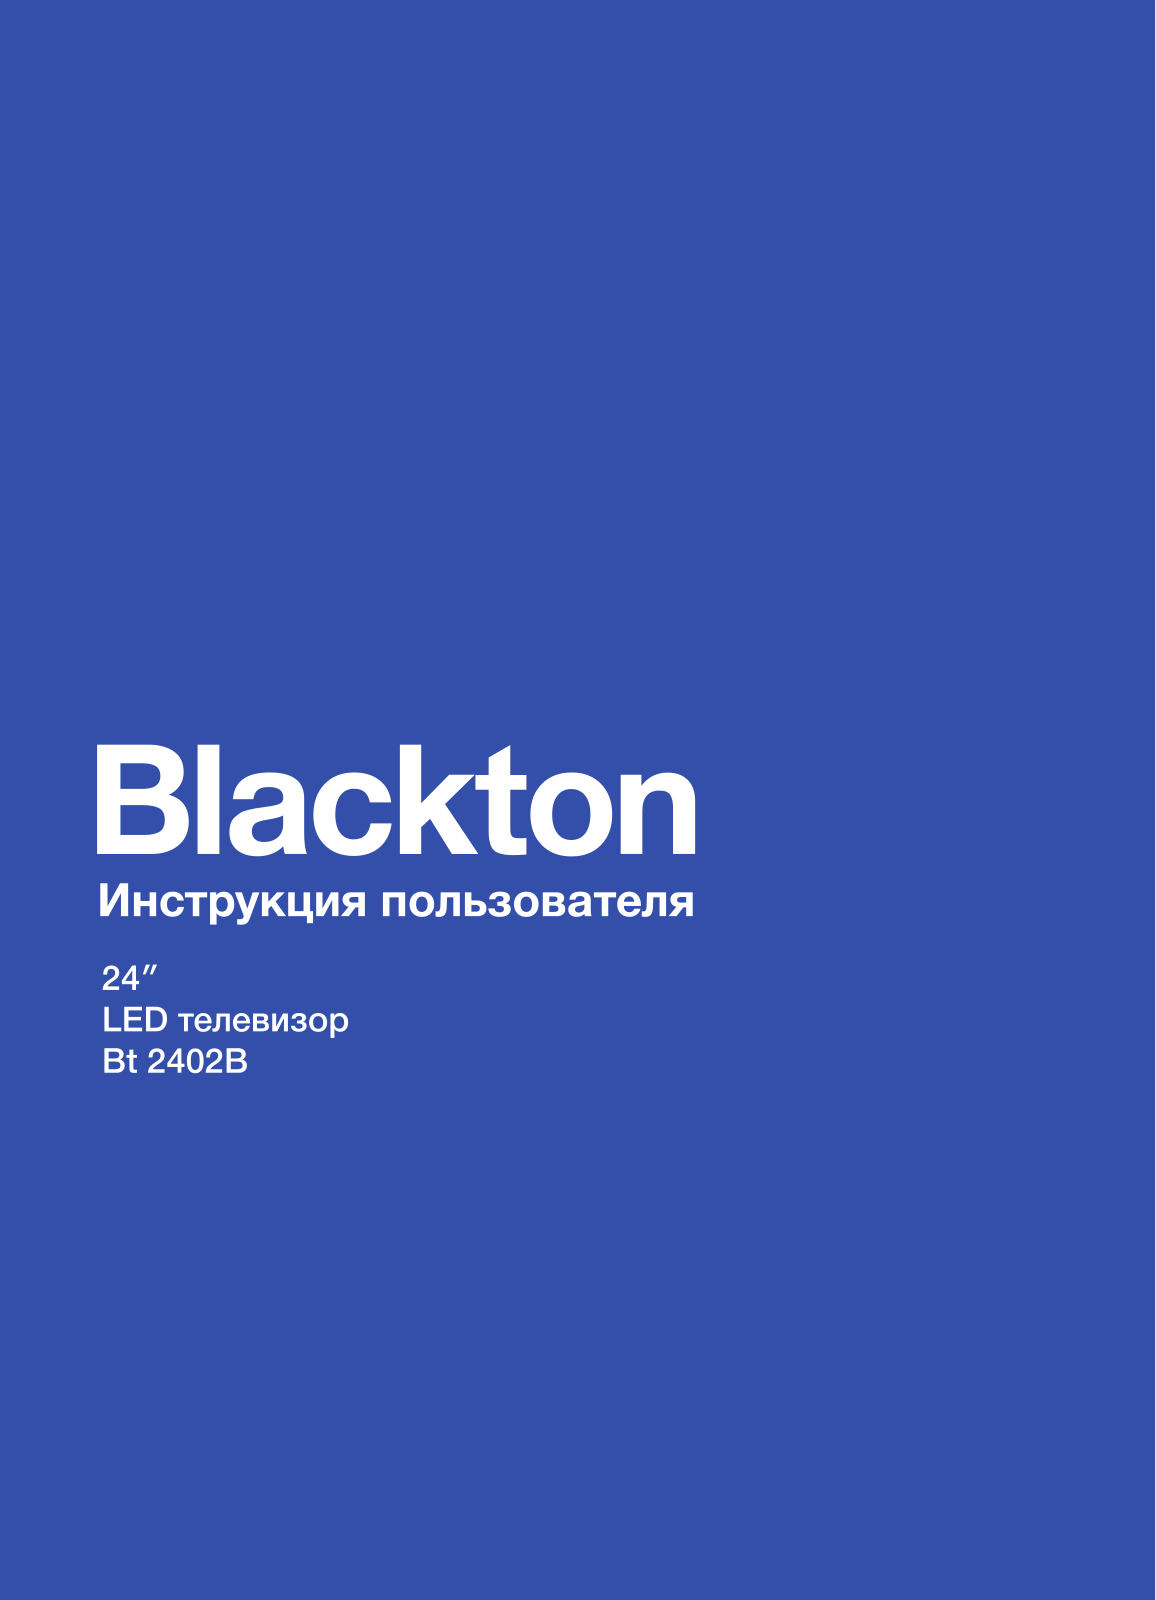 Blackton Bt 2402B User Manual